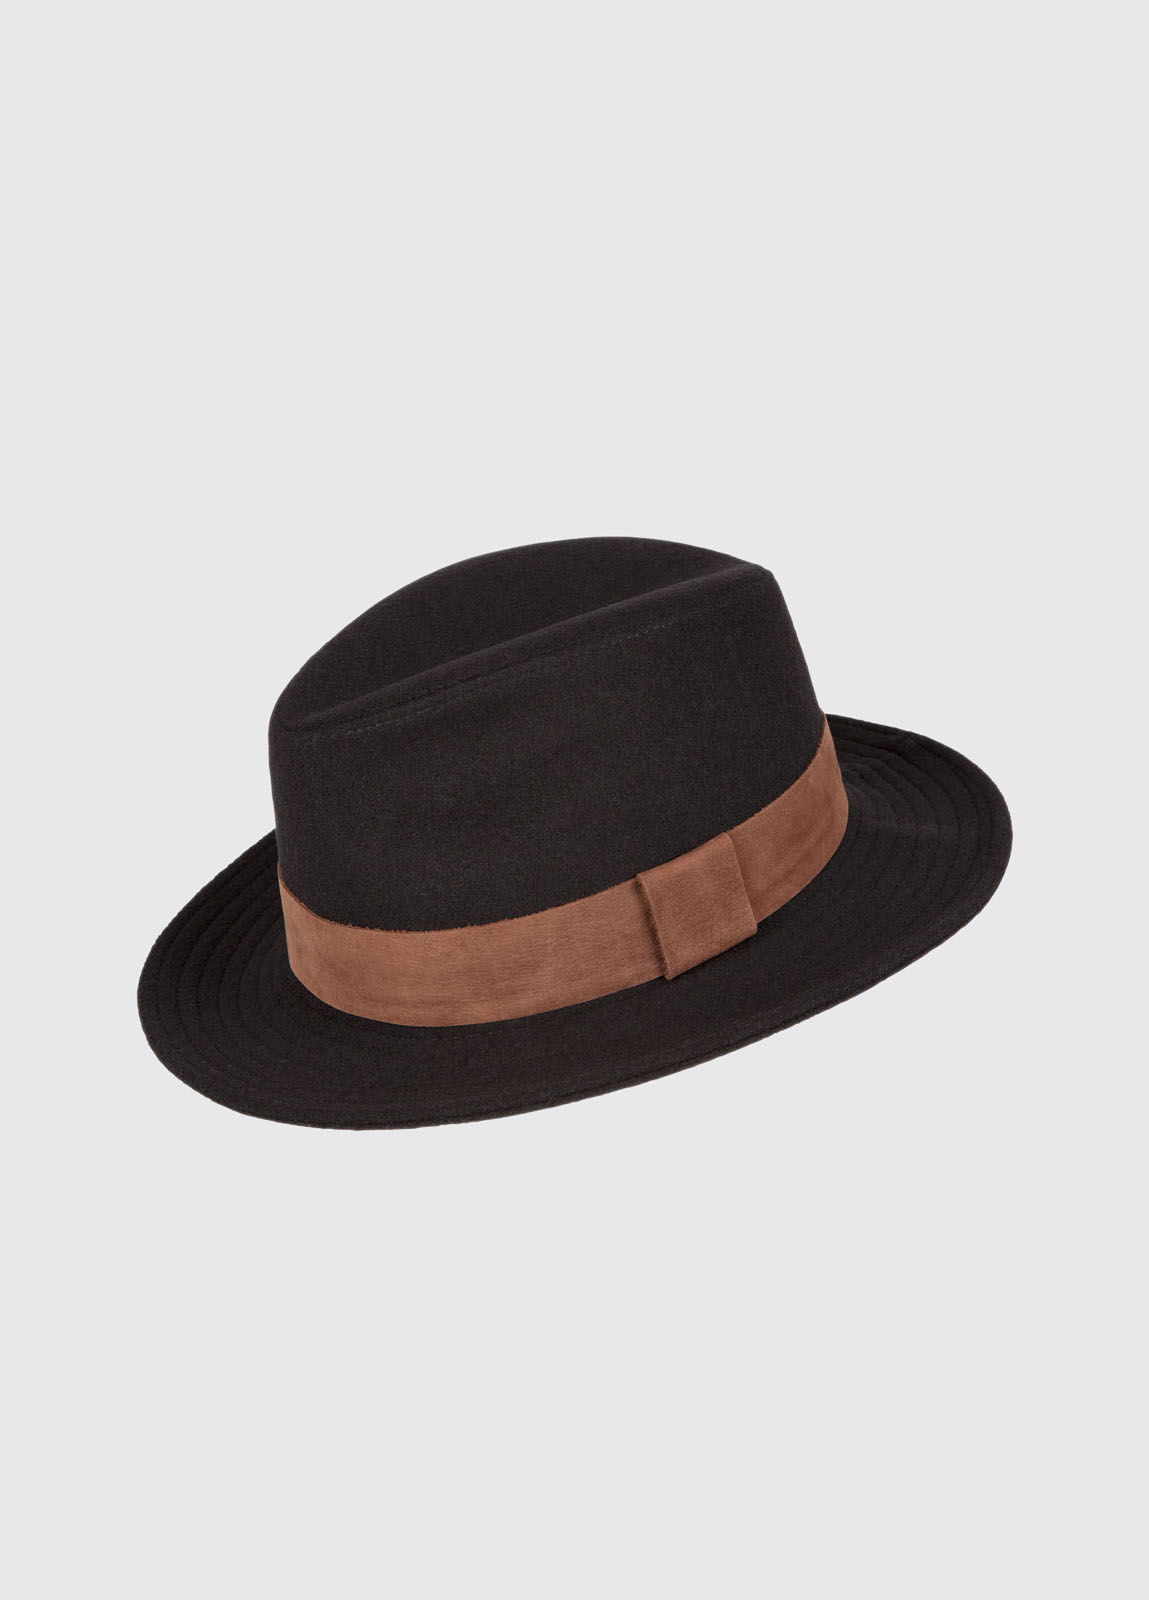 Rathowen Hat - Black